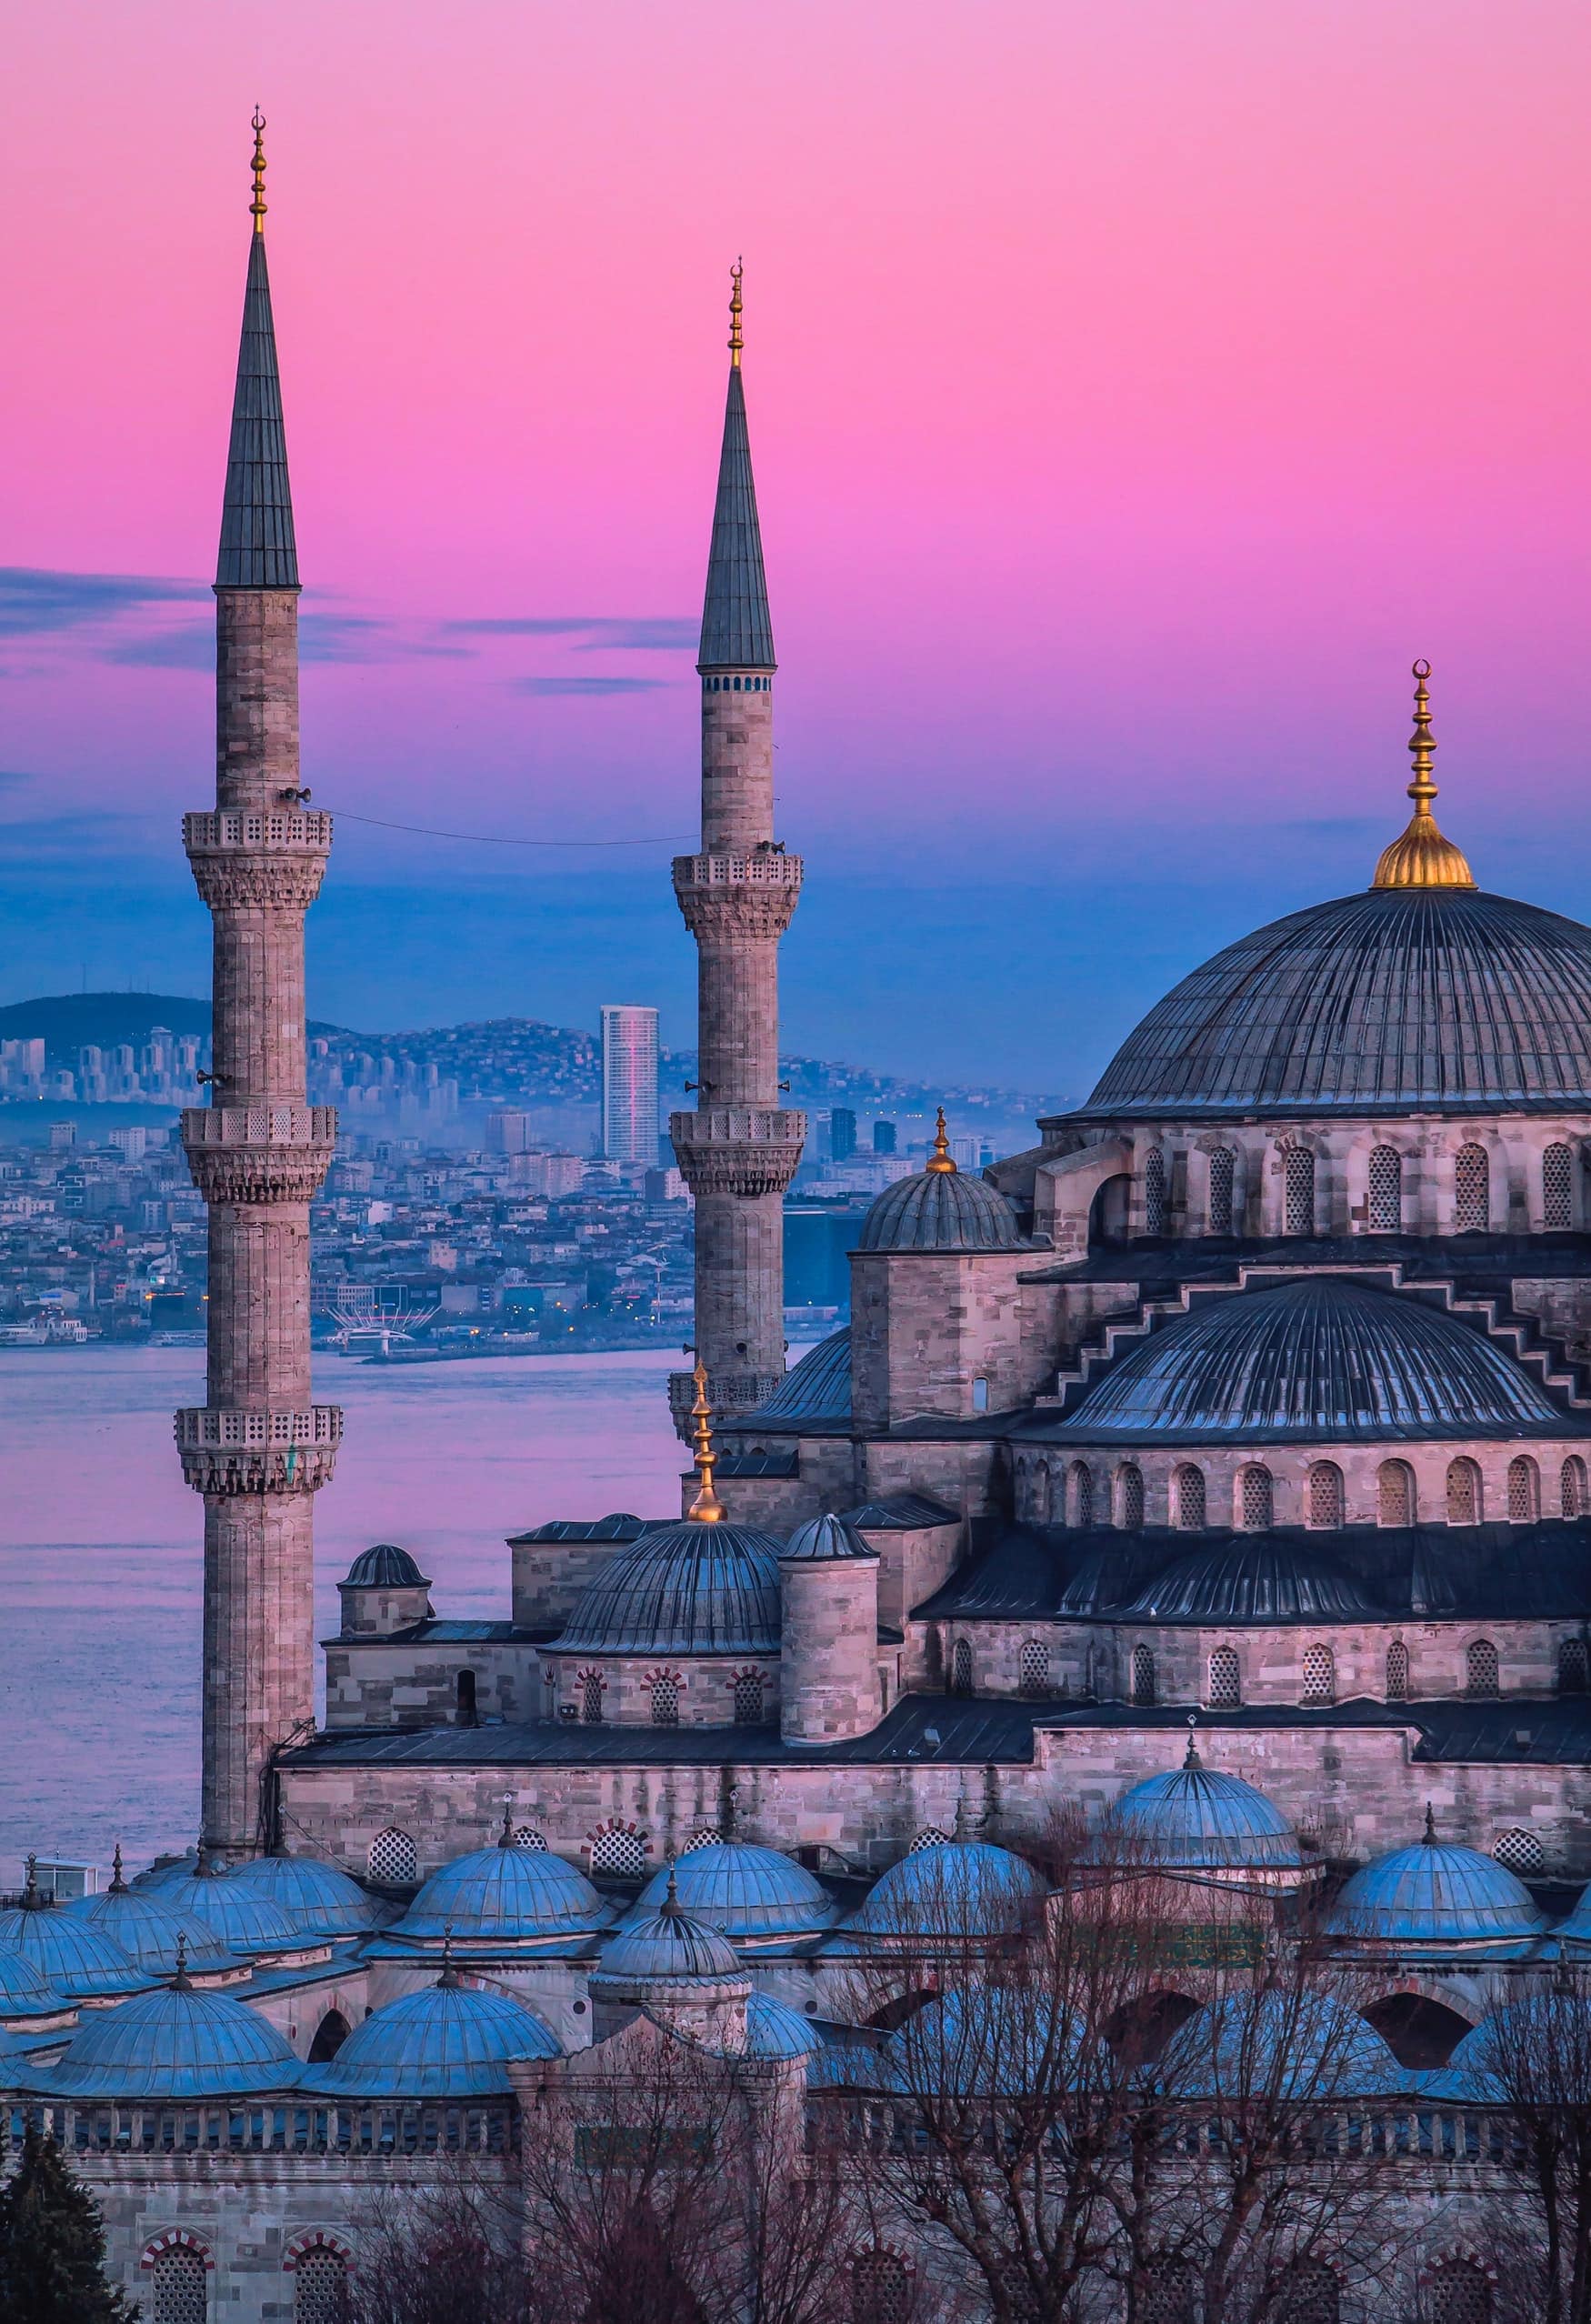 Blaue Moschee in Istanbul